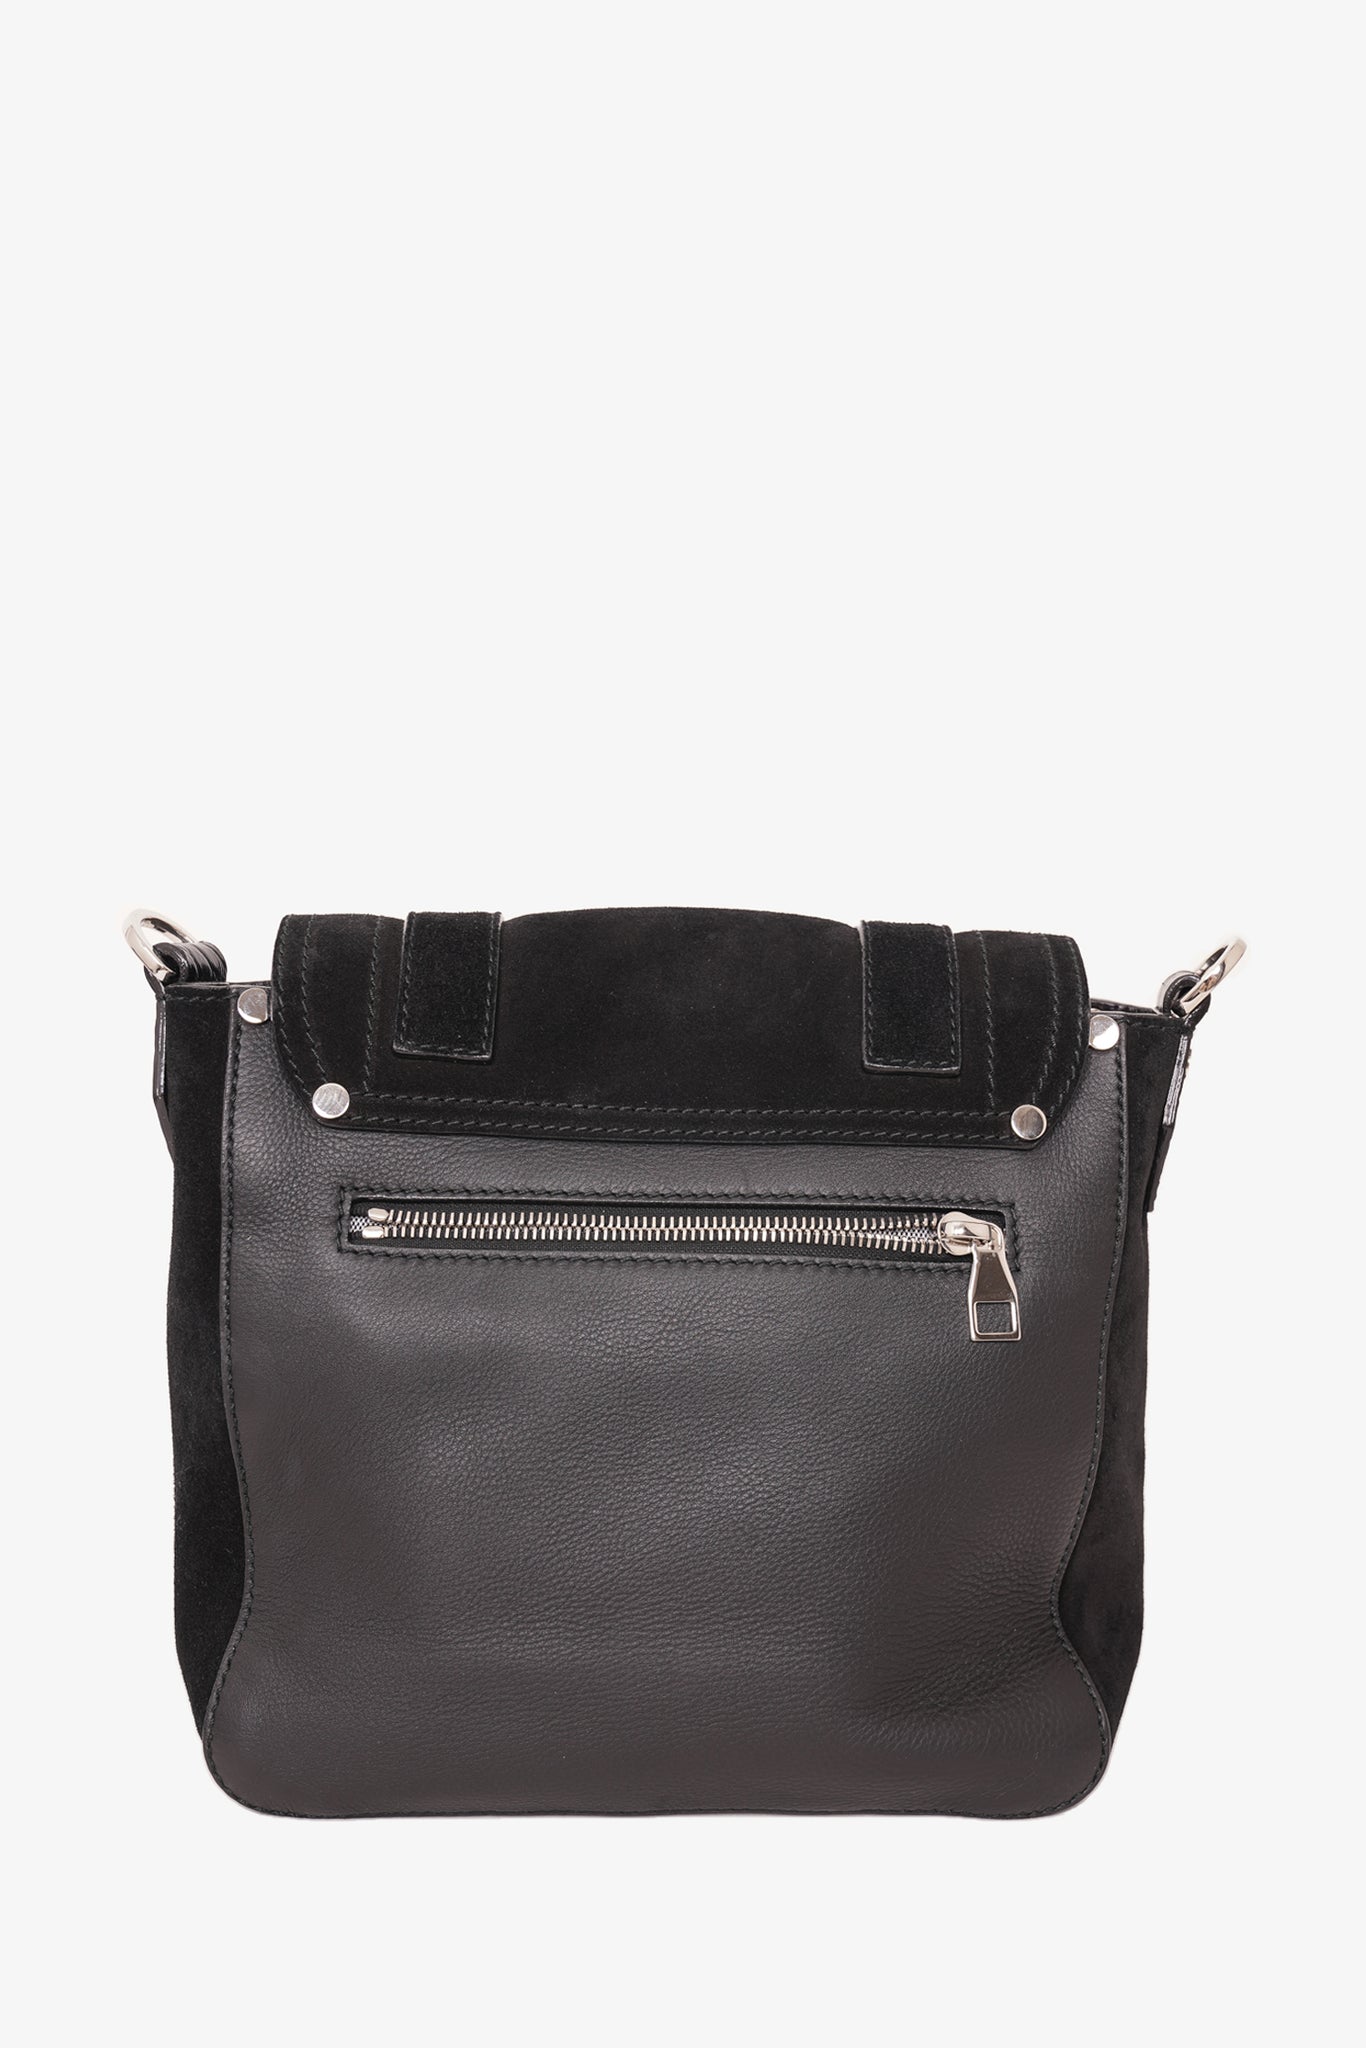 Louis Vuitton 2021 Black Epi Leather Papillon Trunk Bag w/ Chain and  Leather Strap